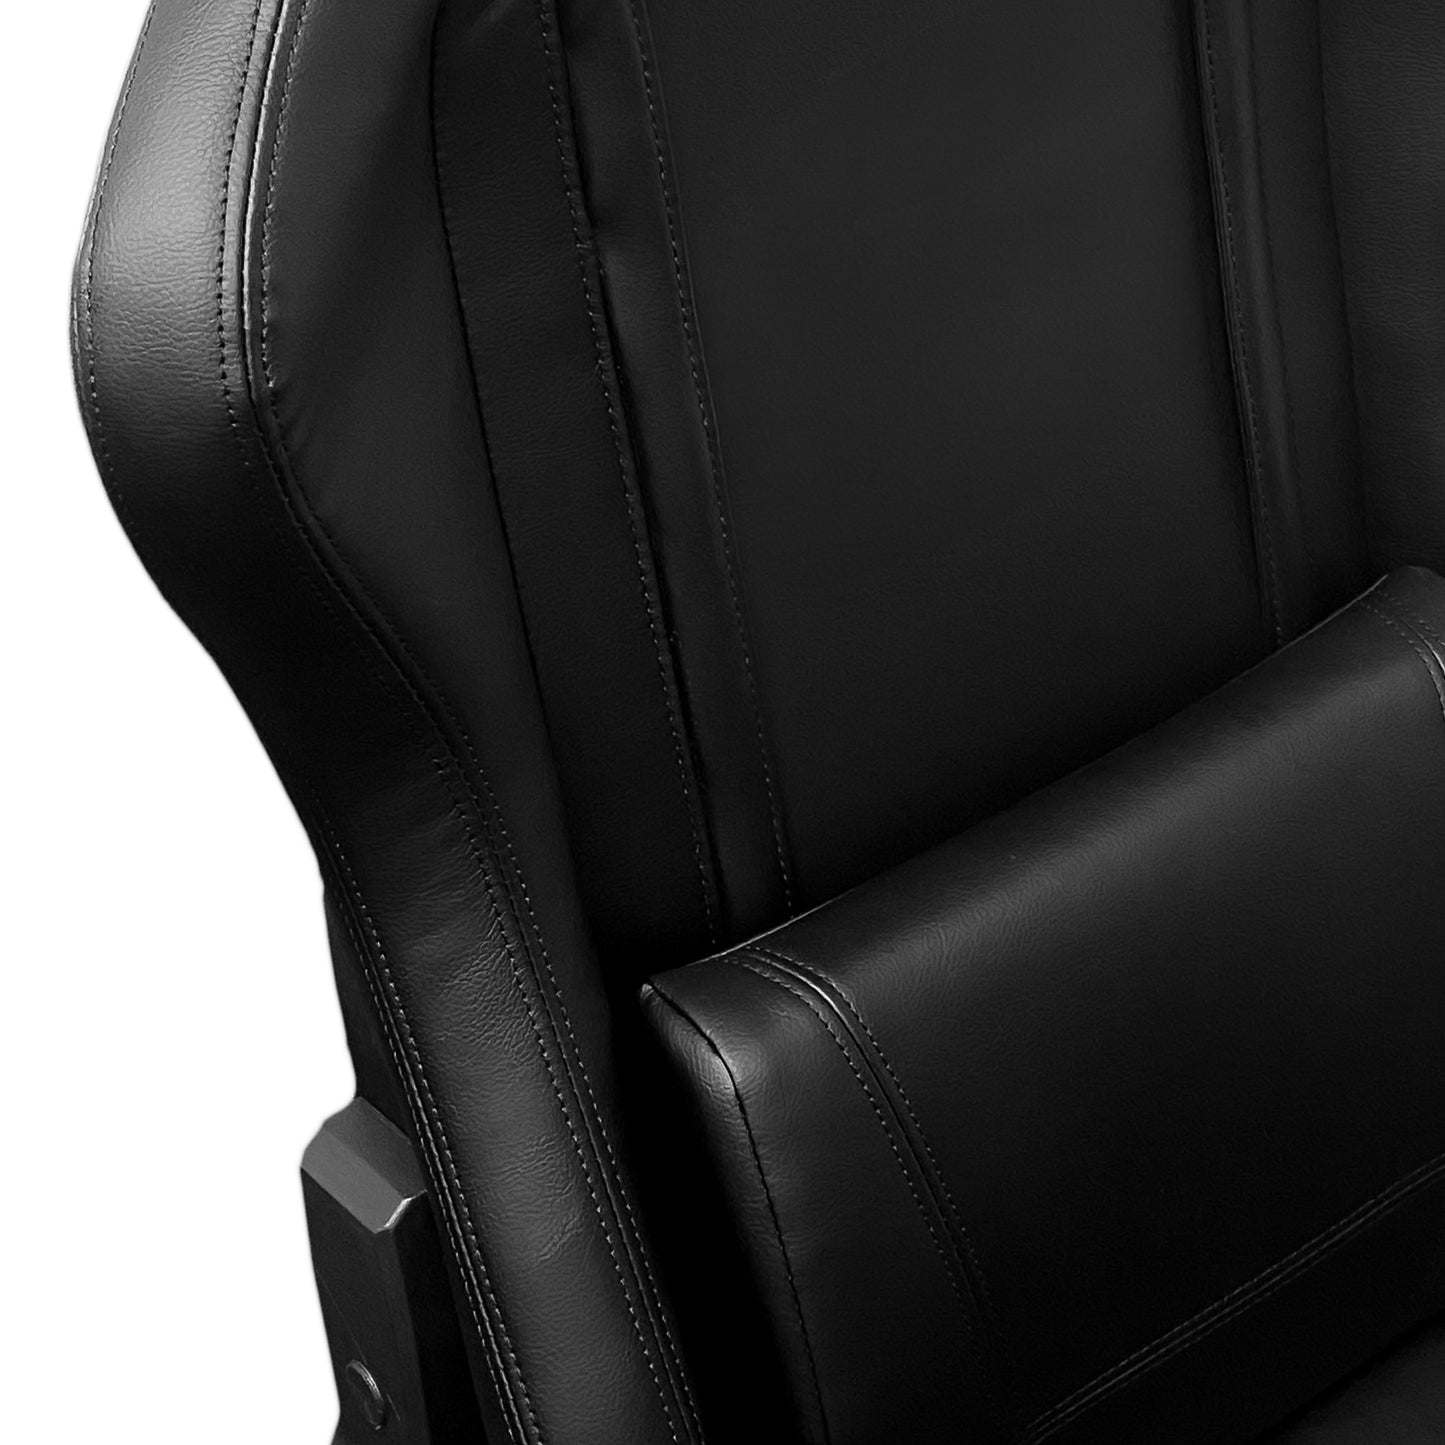 Xpression Pro Gaming Chair with Philadelphia Union Alternate Logo